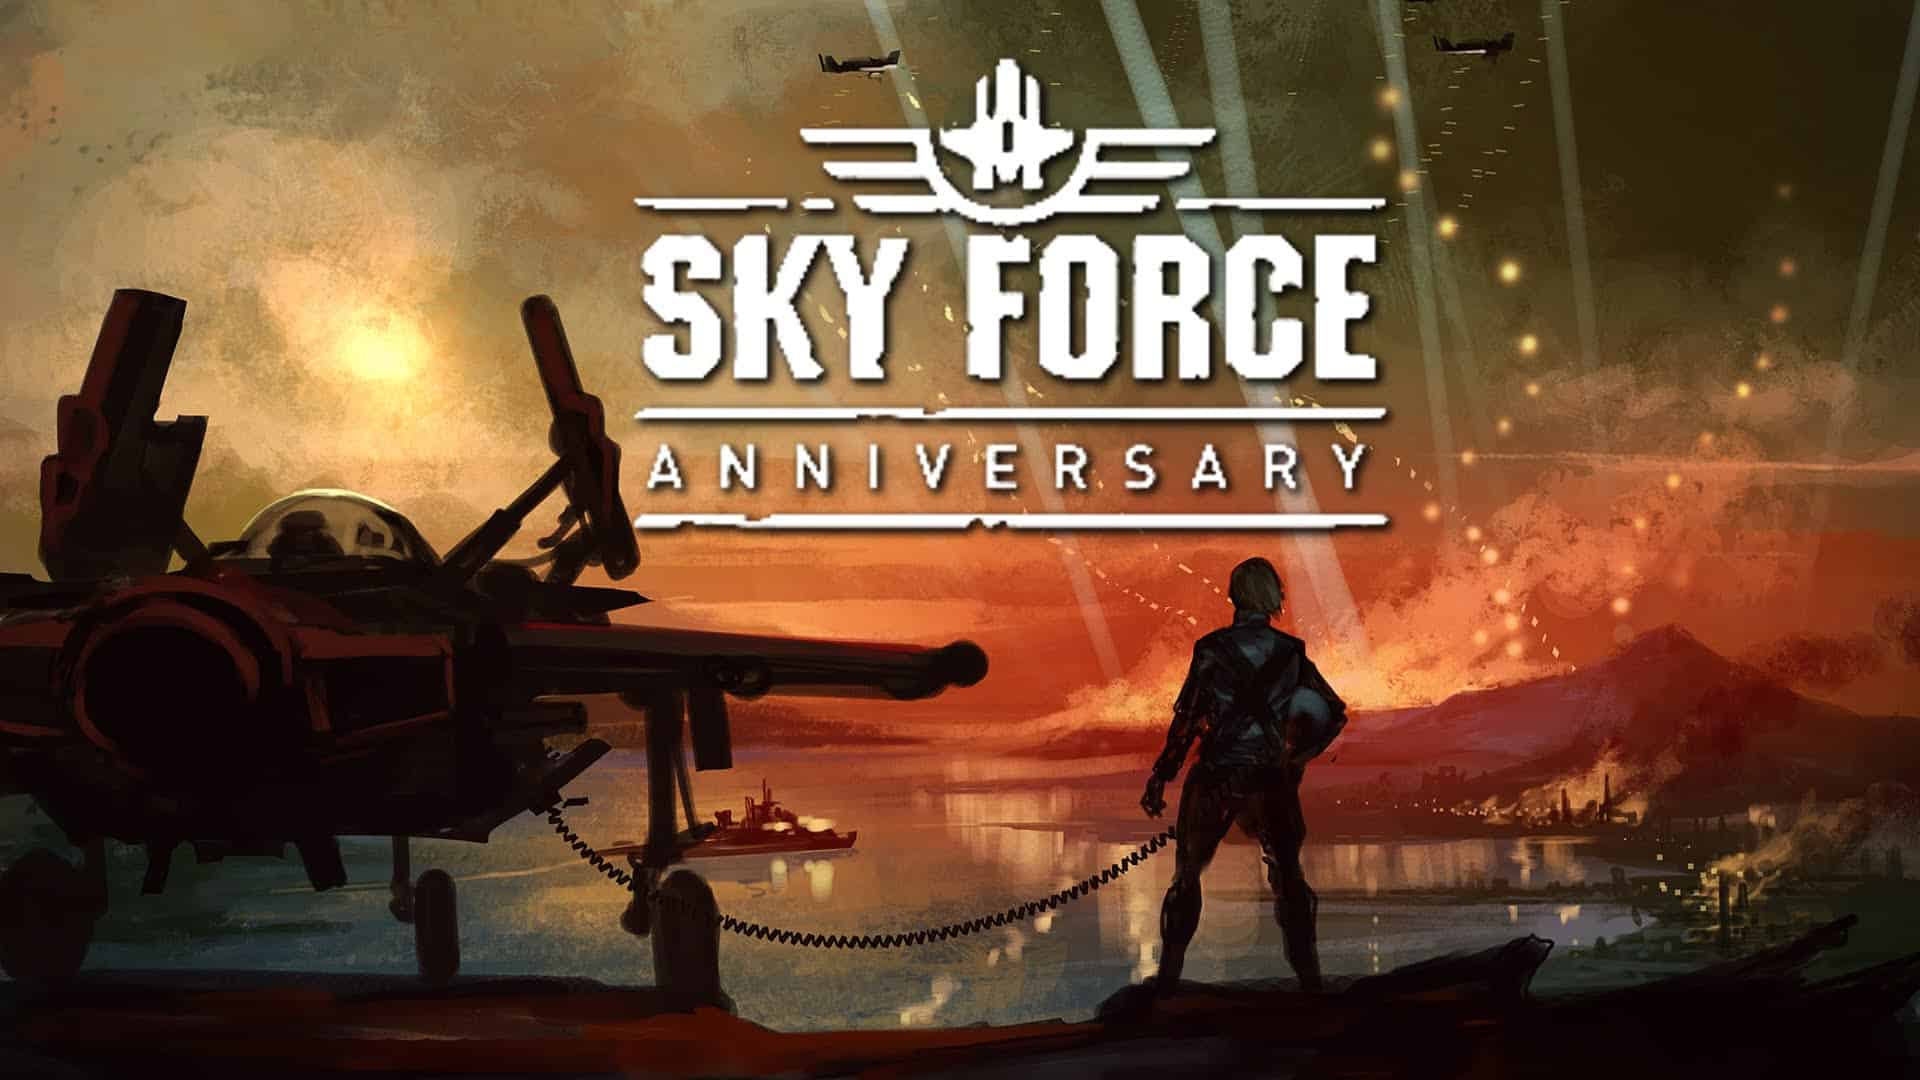 A Look At Sky Force Anniversary • AmigaGuru's GamerBlog